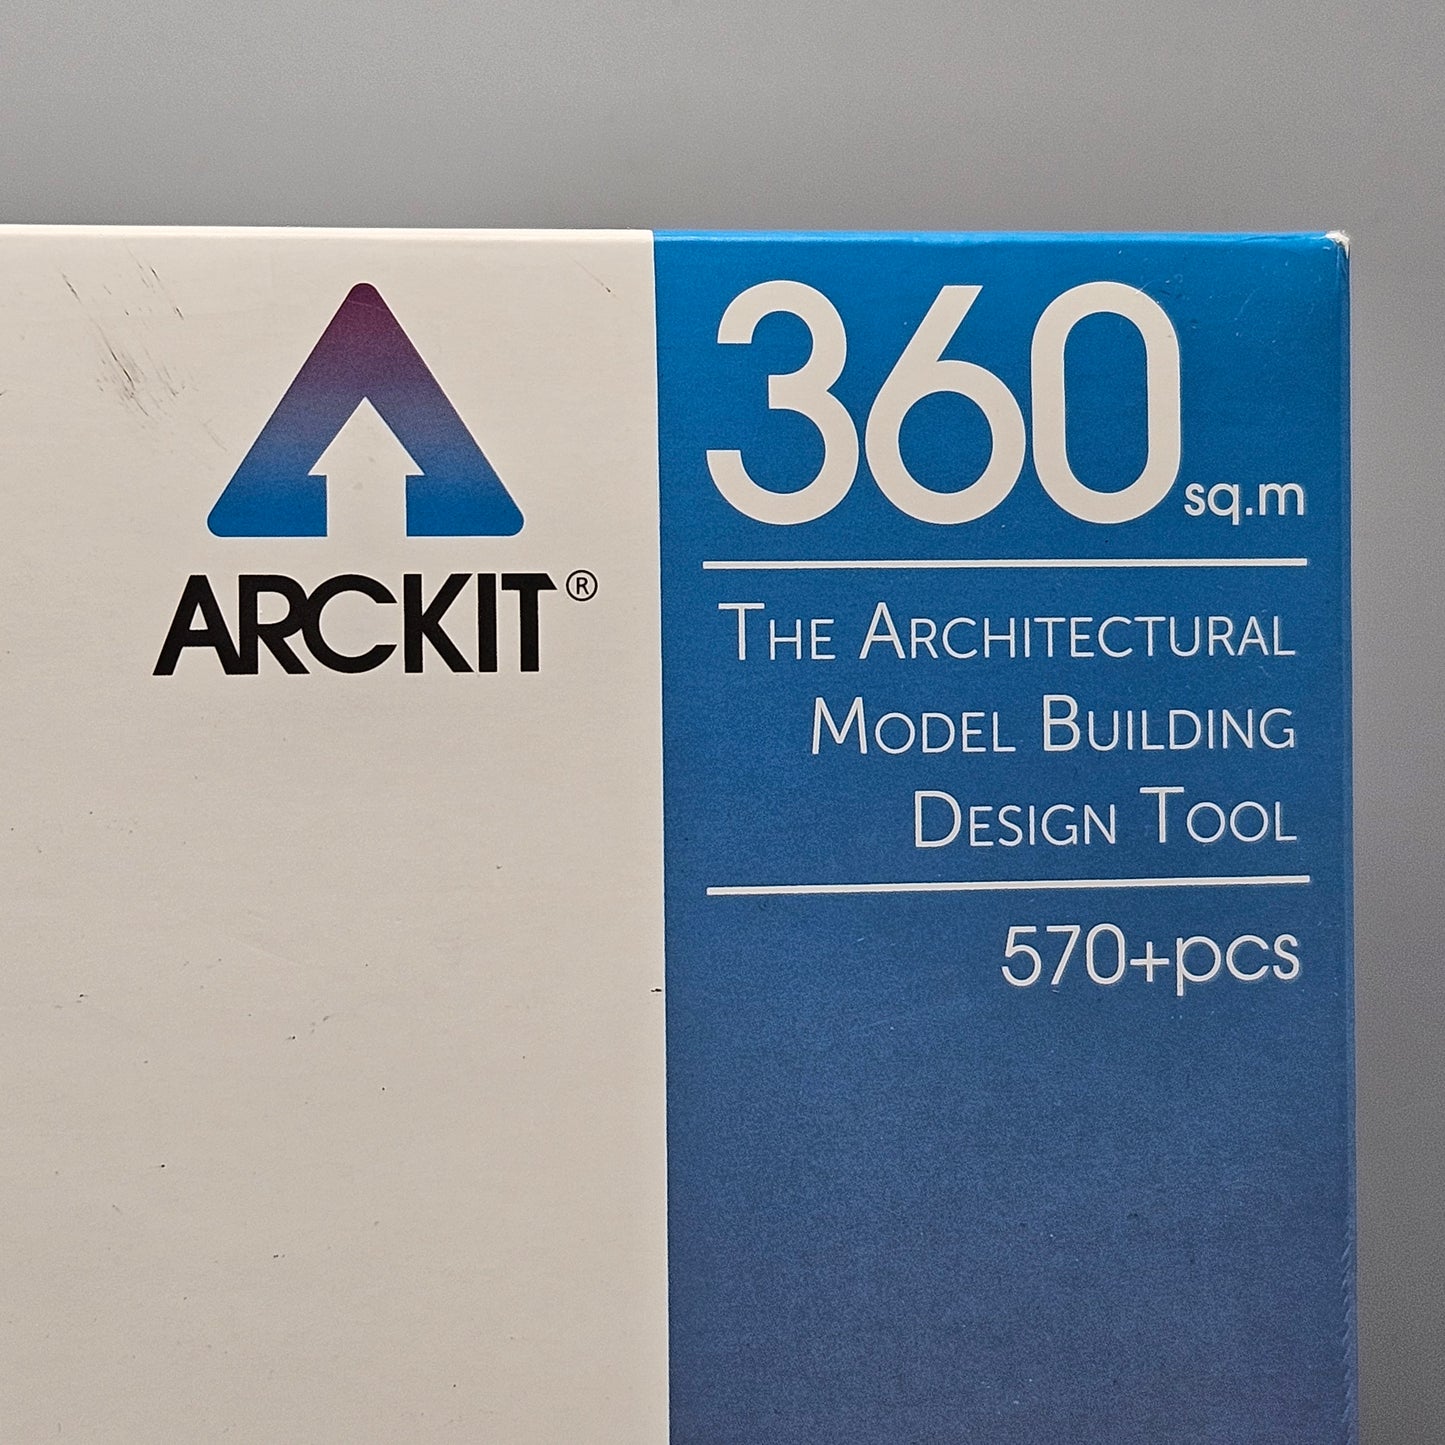 Brand New Arckit 360 Architect Model Building Kit Item A10036